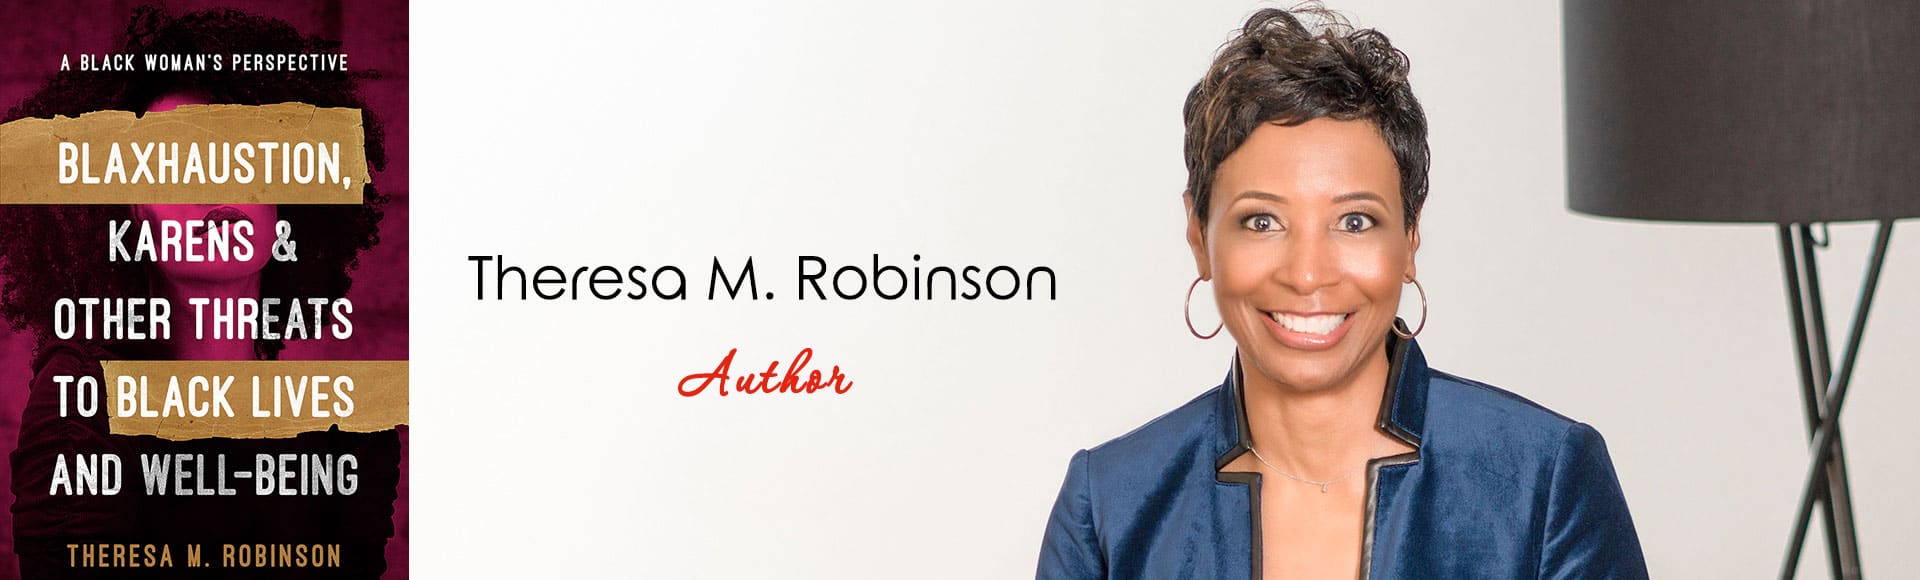 Theresa M. Robinson Author Hero Image